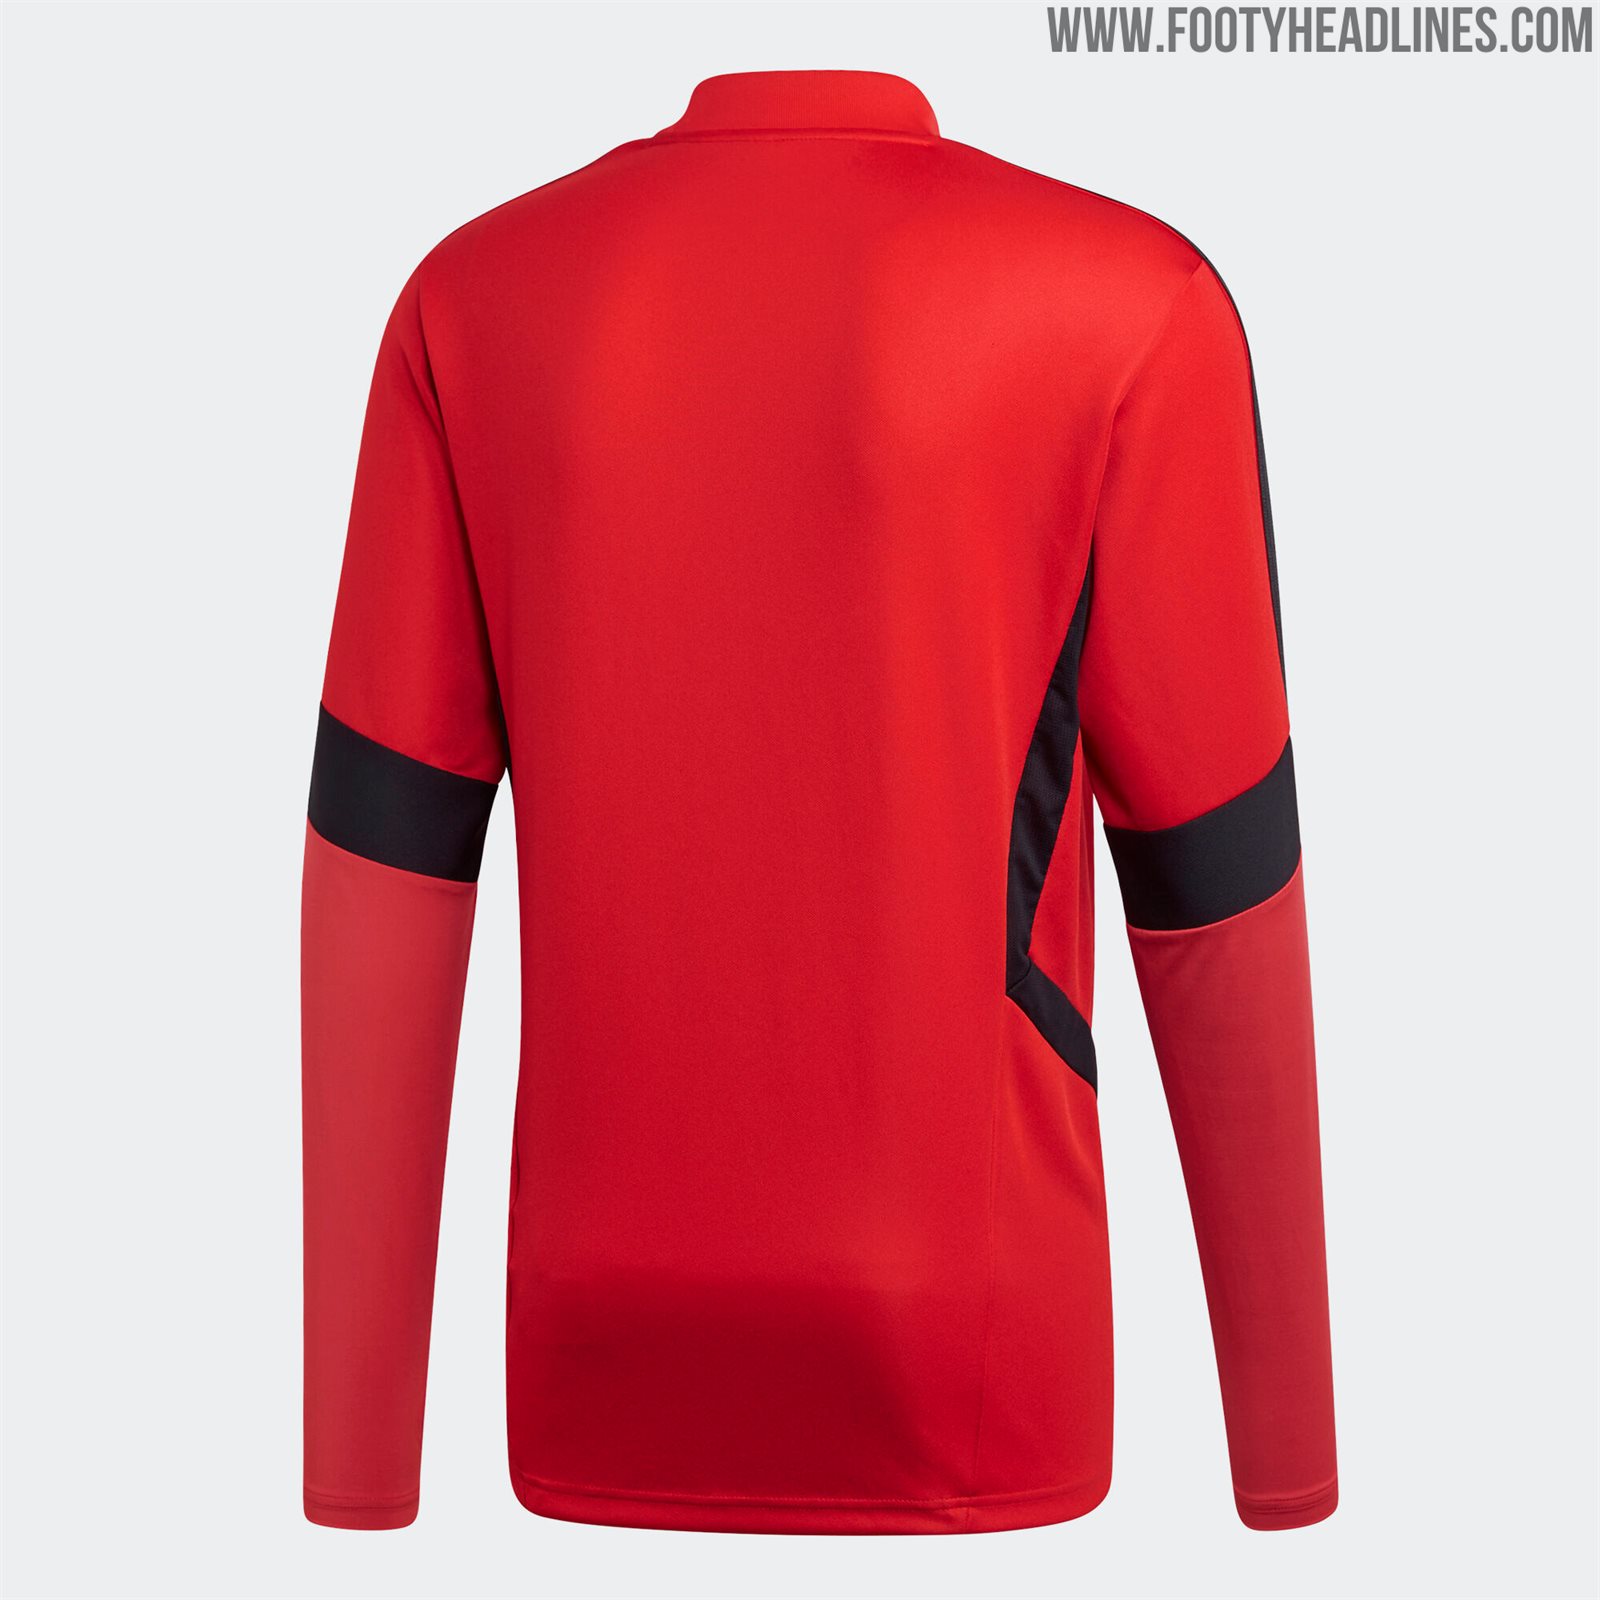 Manchester United 2020 Pre-Match Kit Released & Training Kit Revealed ...